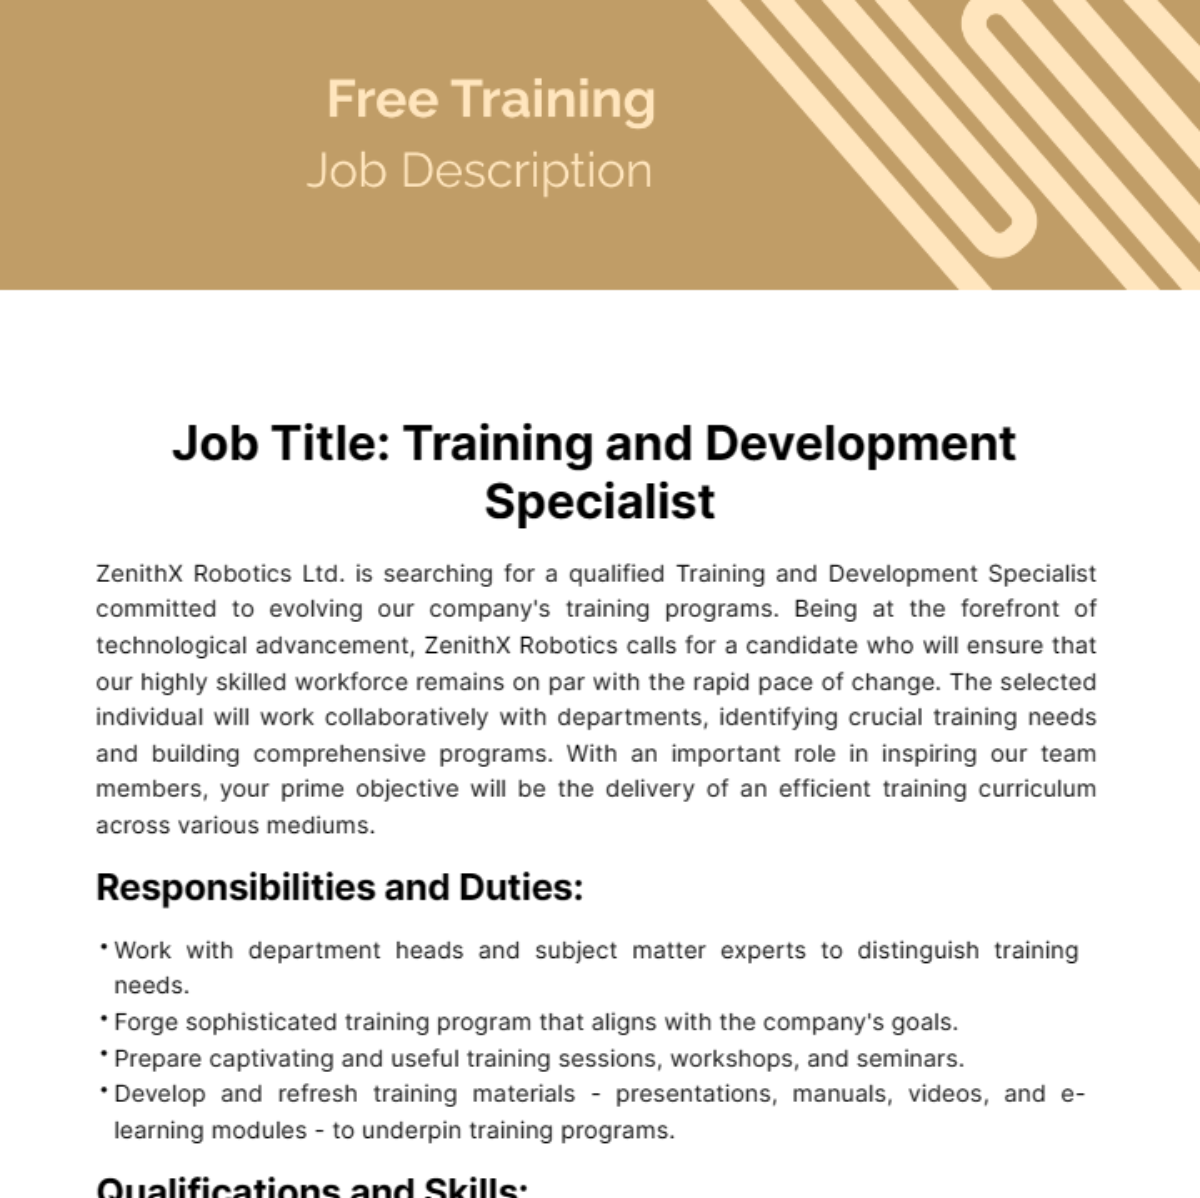 Free Training Job Description Template